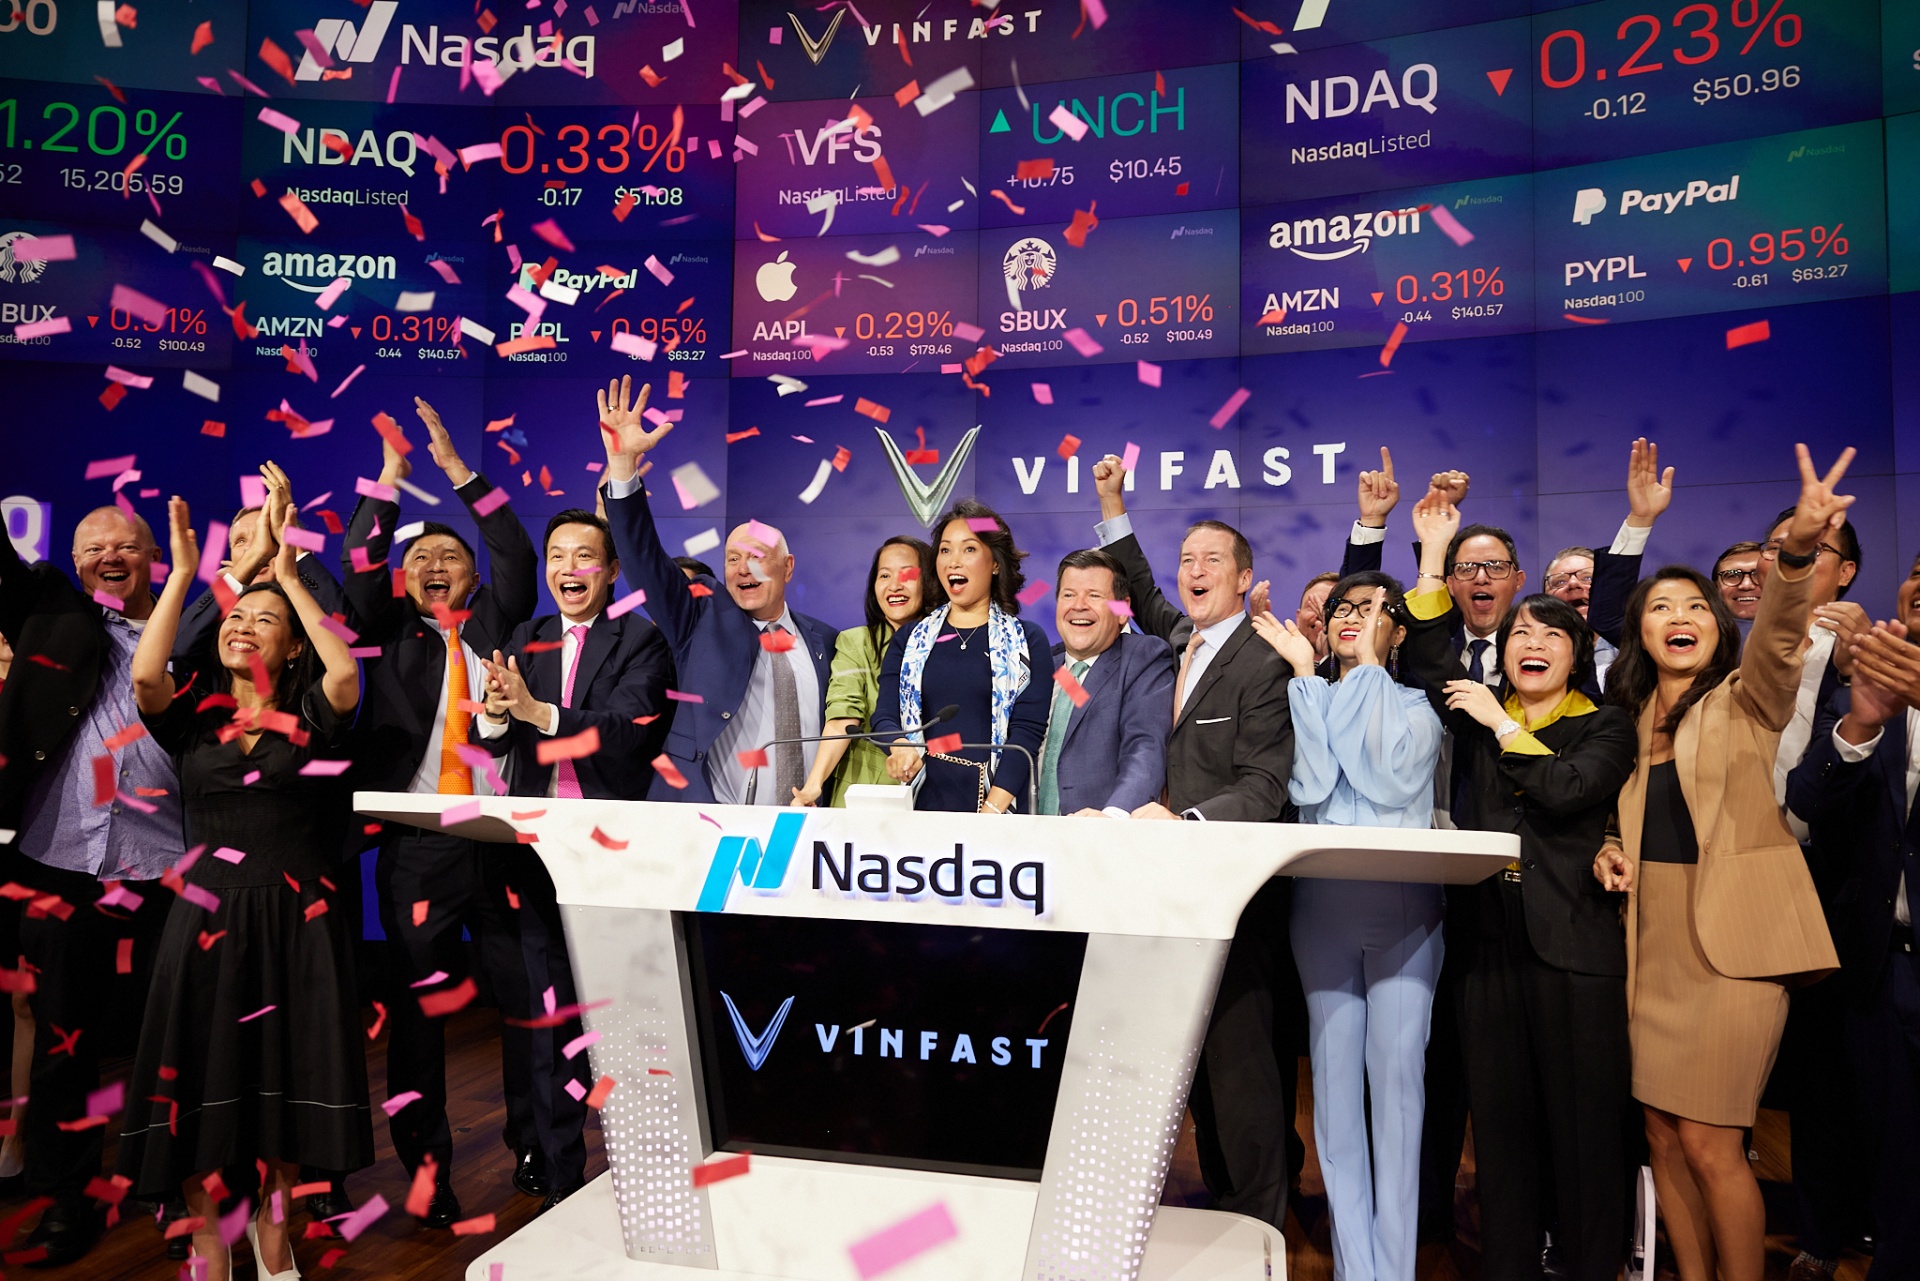 VinFast makes its debut on Nasdaq